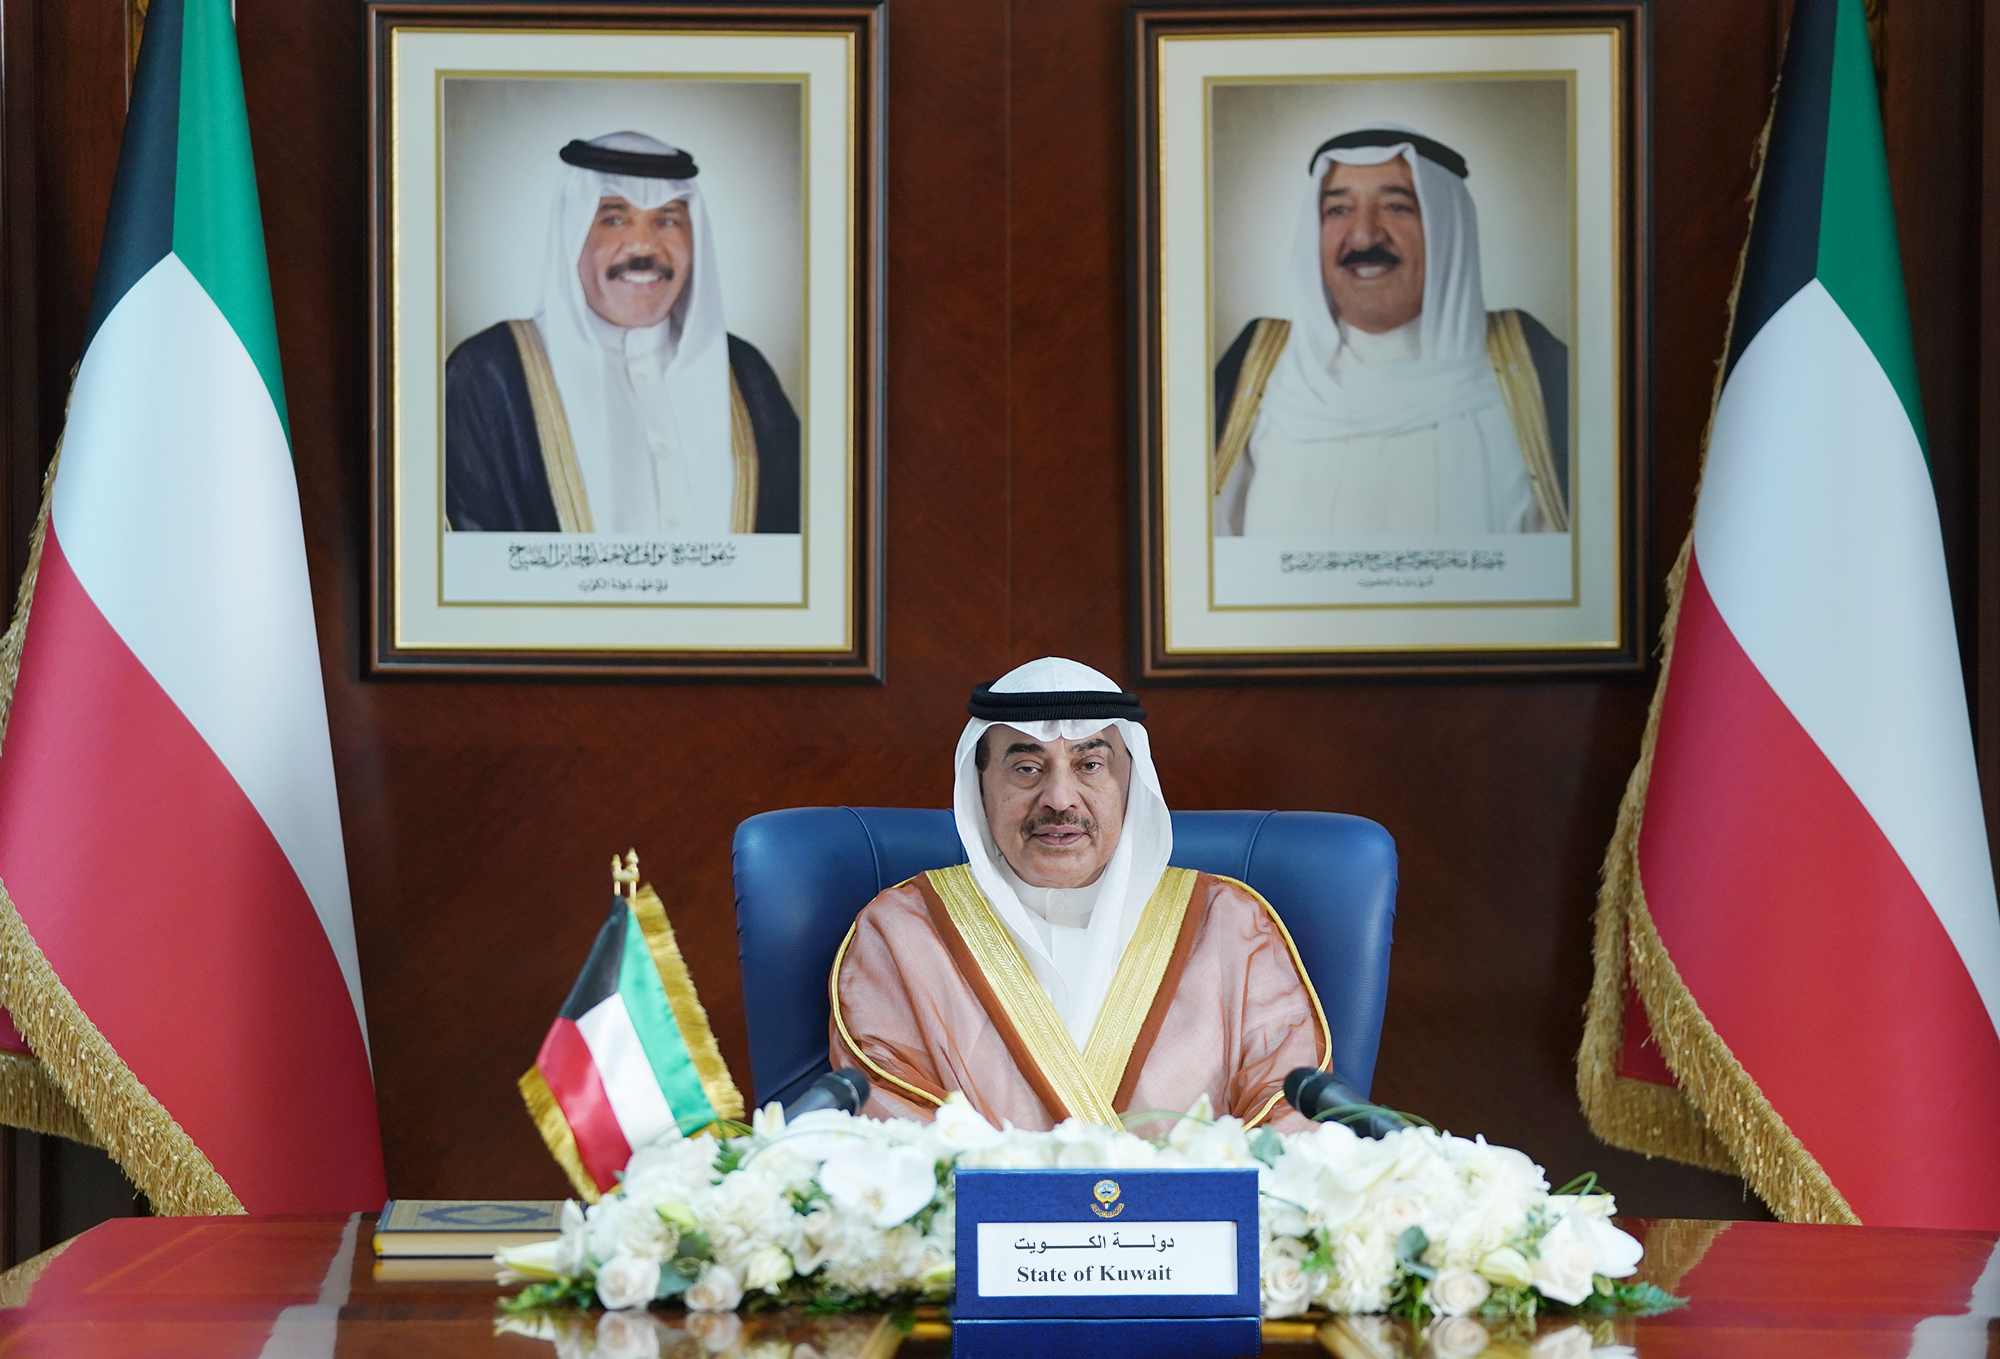 Representative of His Highness the Amir Sheikh Sabah Al-Ahmad Al-Jaber Al-Sabah, His Highness the Prime Minister Sheikh Sabah Khaled Al-Hamad Al-Sabah